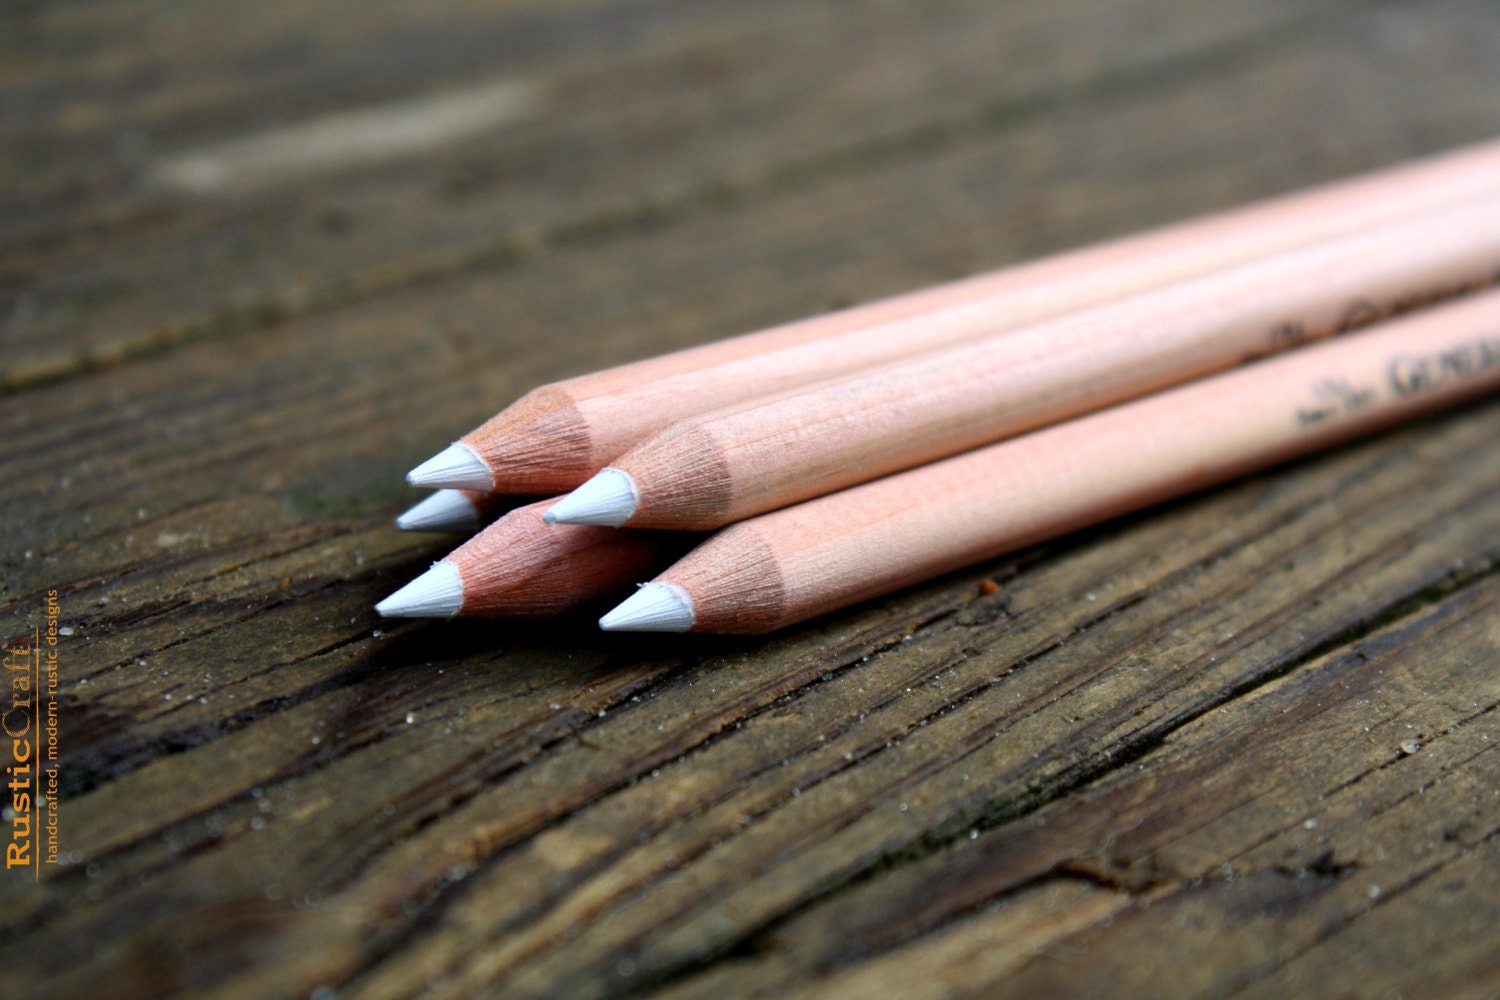 MultiPastel (R) Chalk Pencils 4/Pkg, Brights